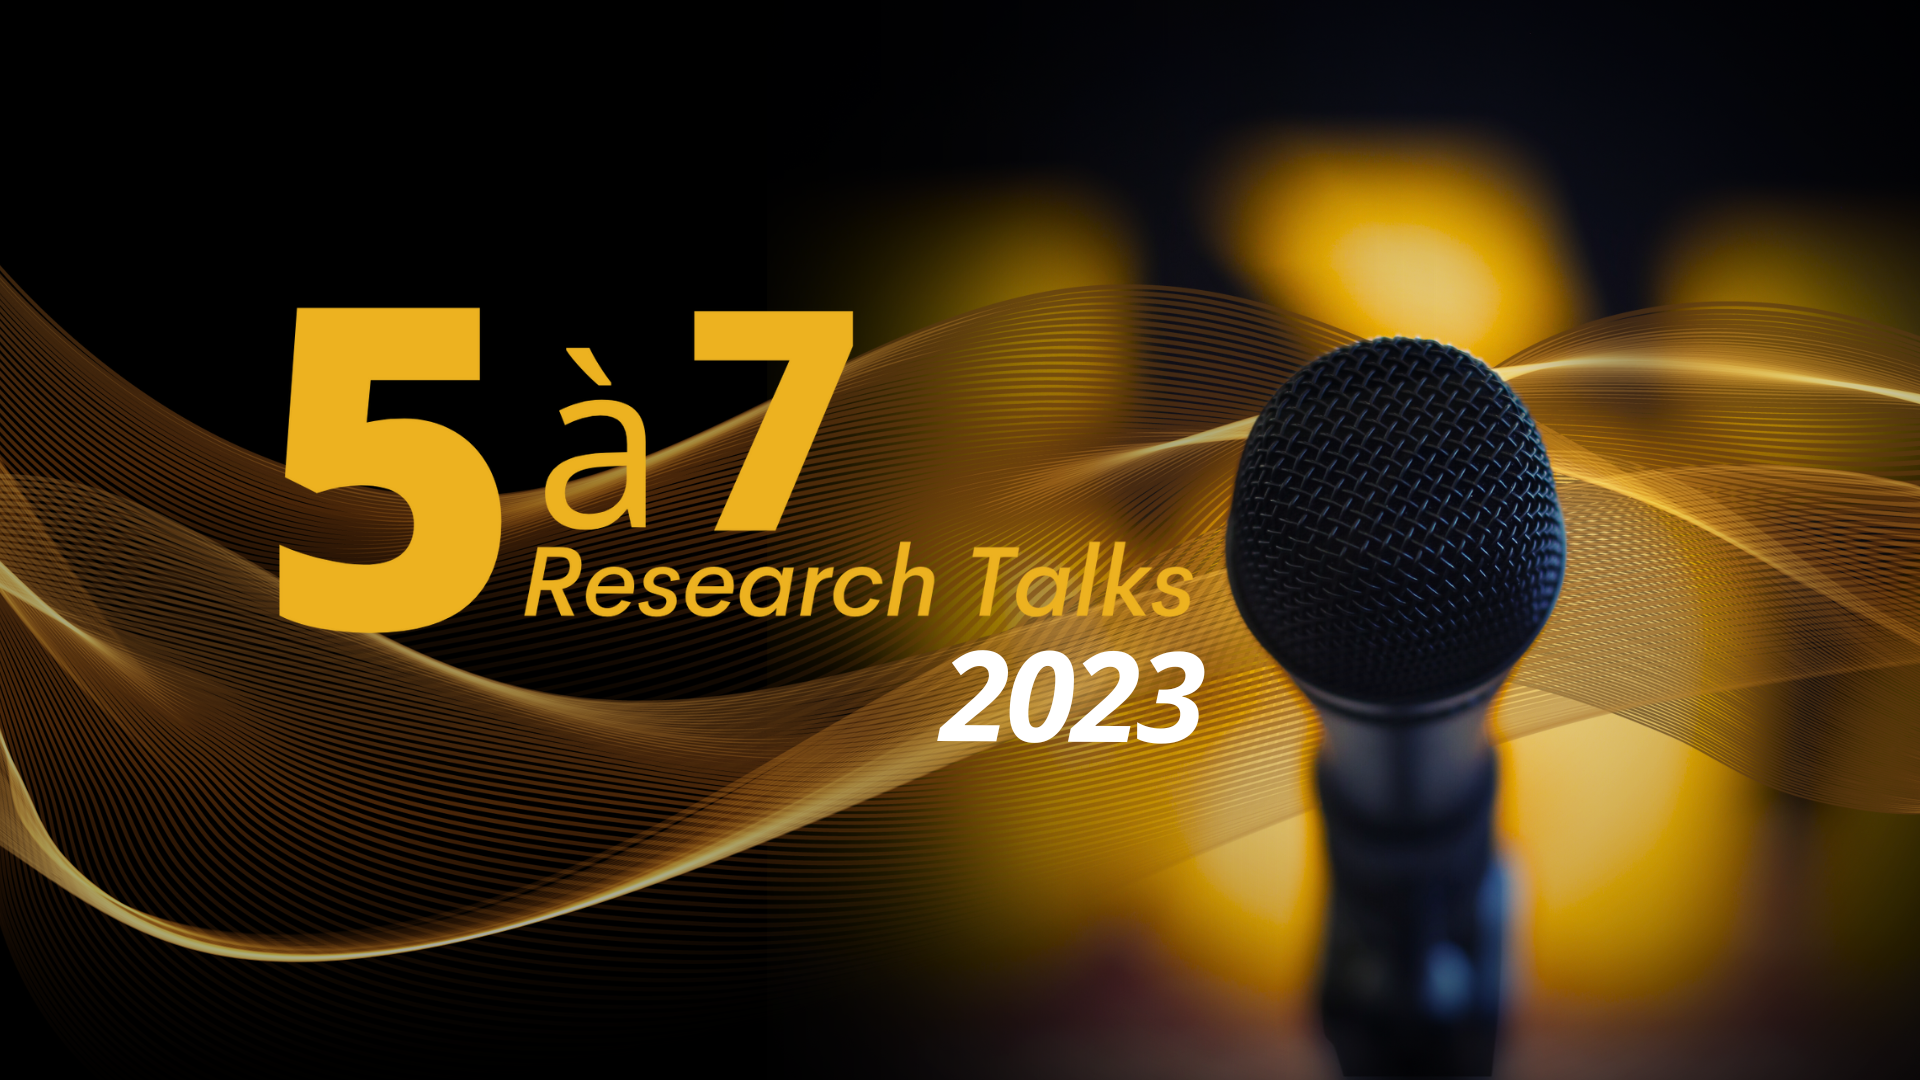 Cing à Sept Research Talks 2023